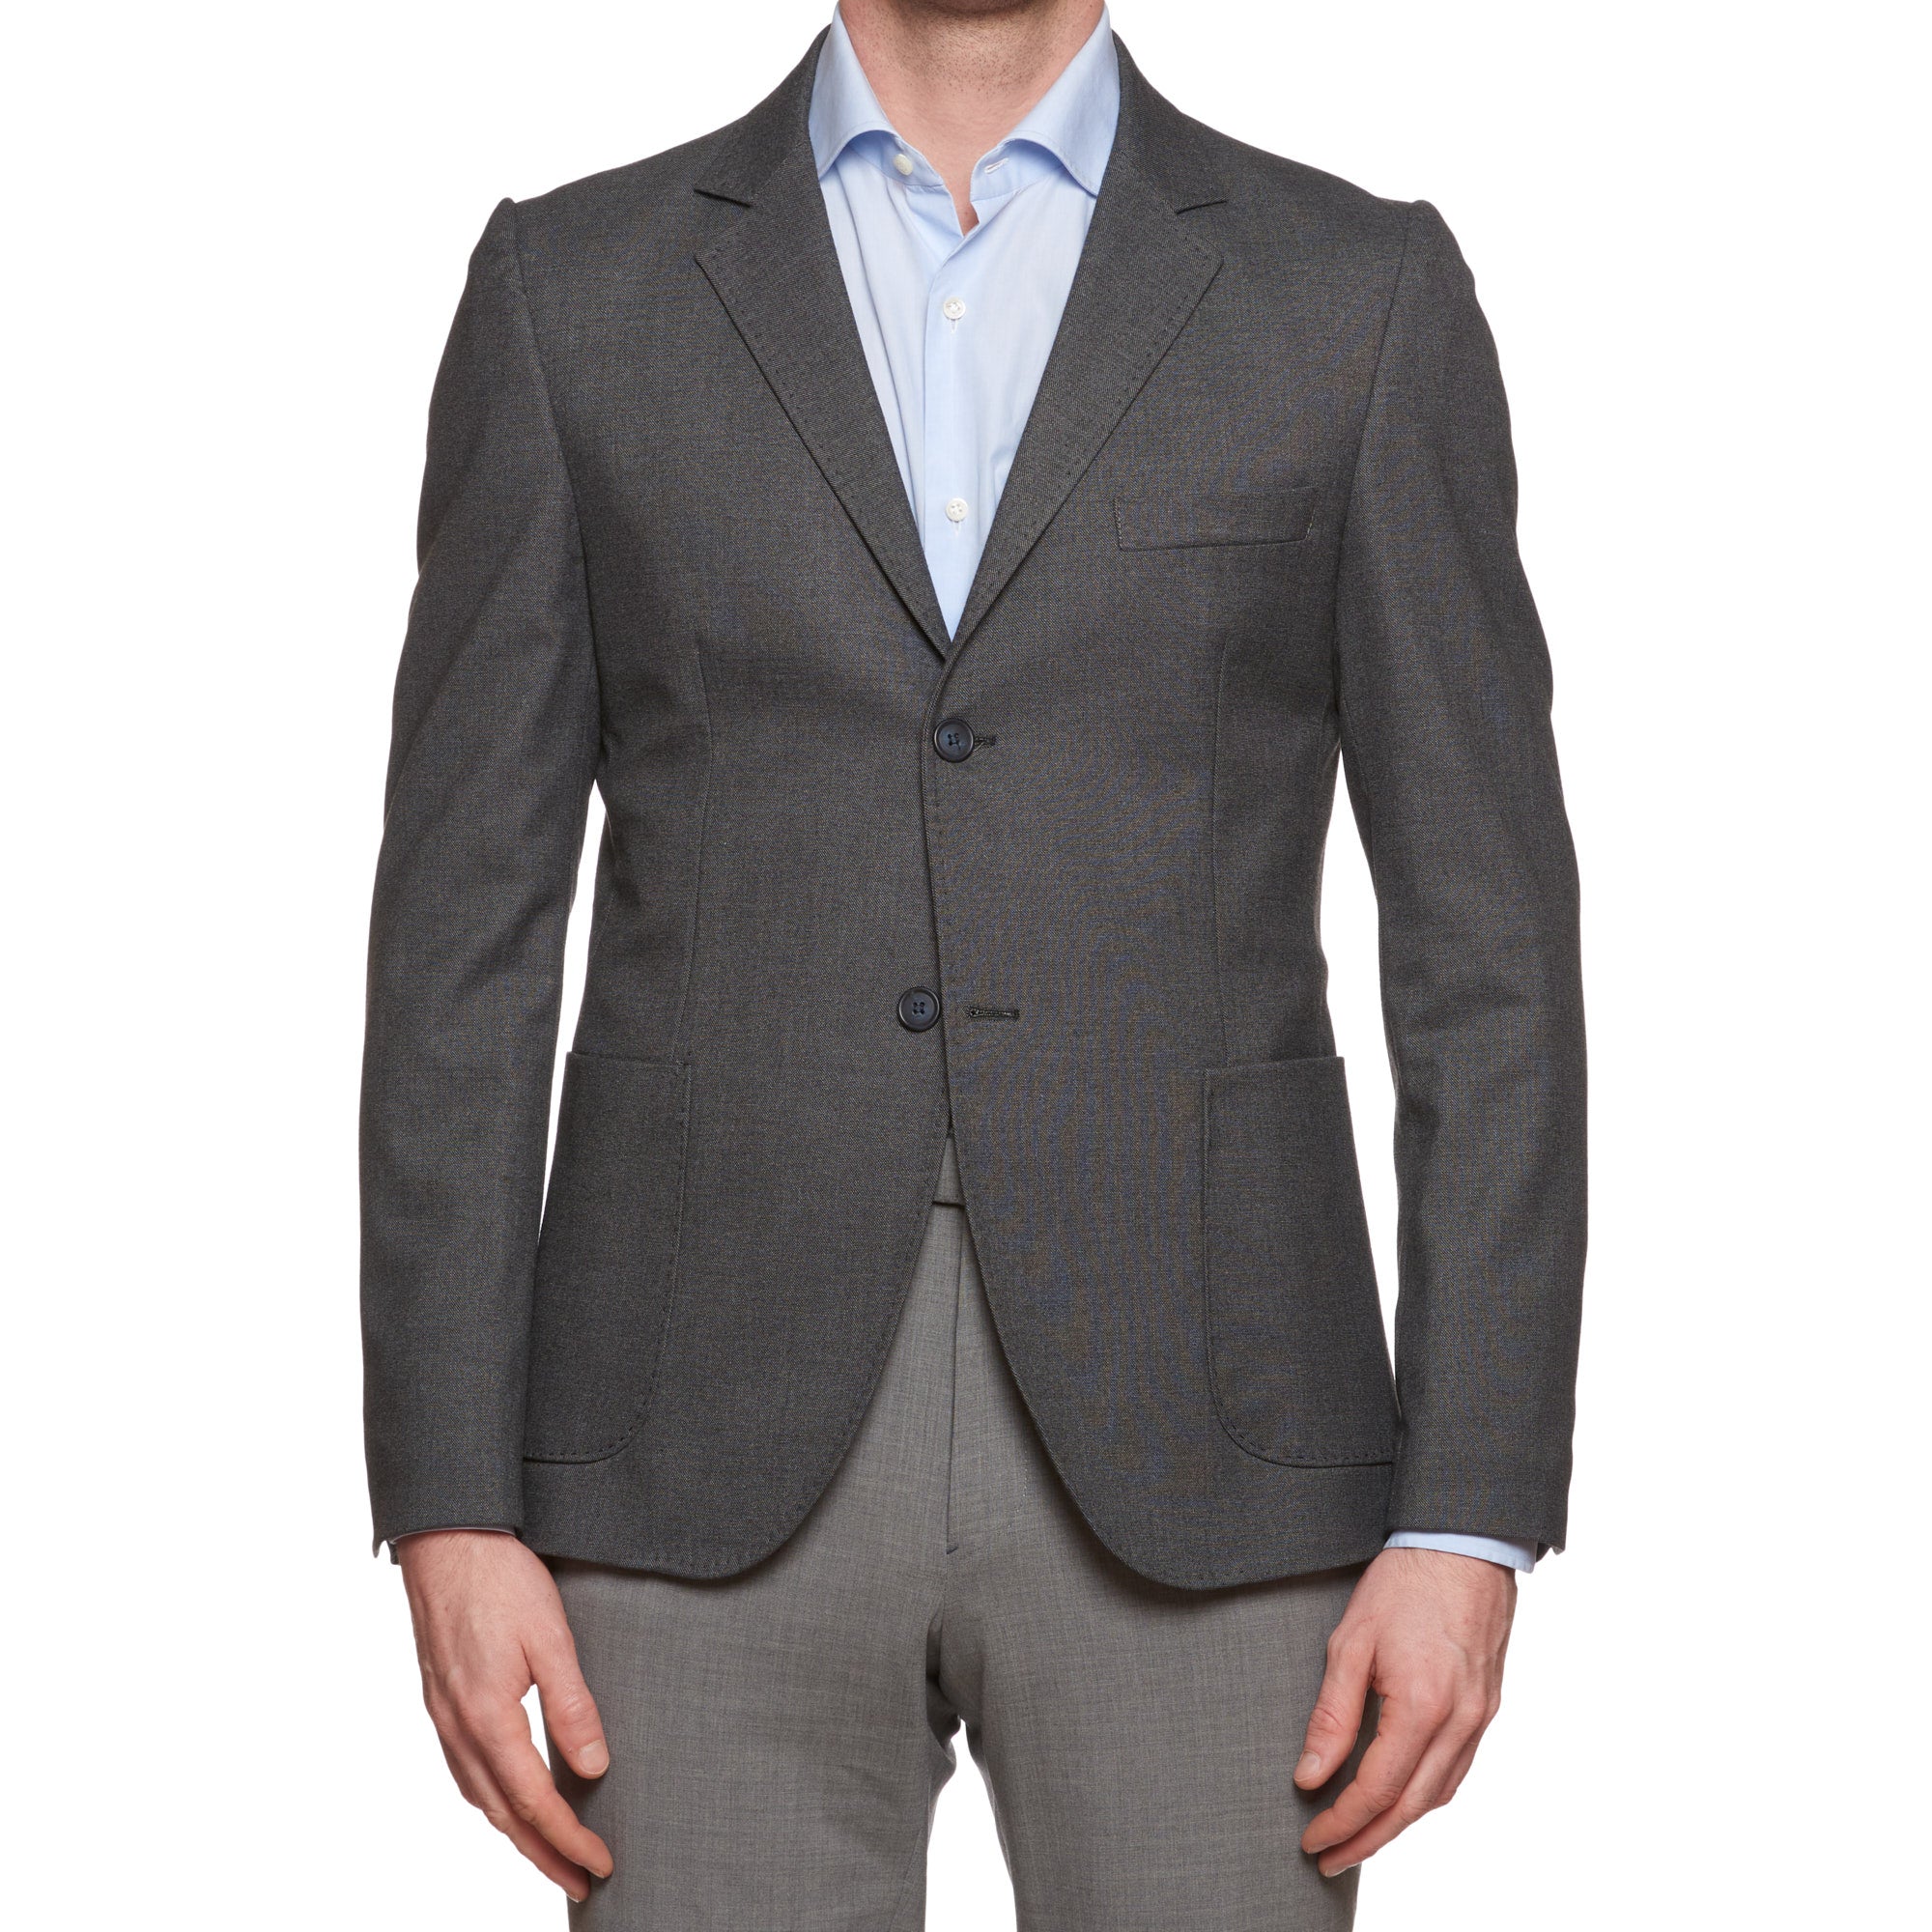 VINCENZO PALUMBO Napoli Gray Wool Sport Coat Jacket EU 46 NEW US 36 Slim Fit